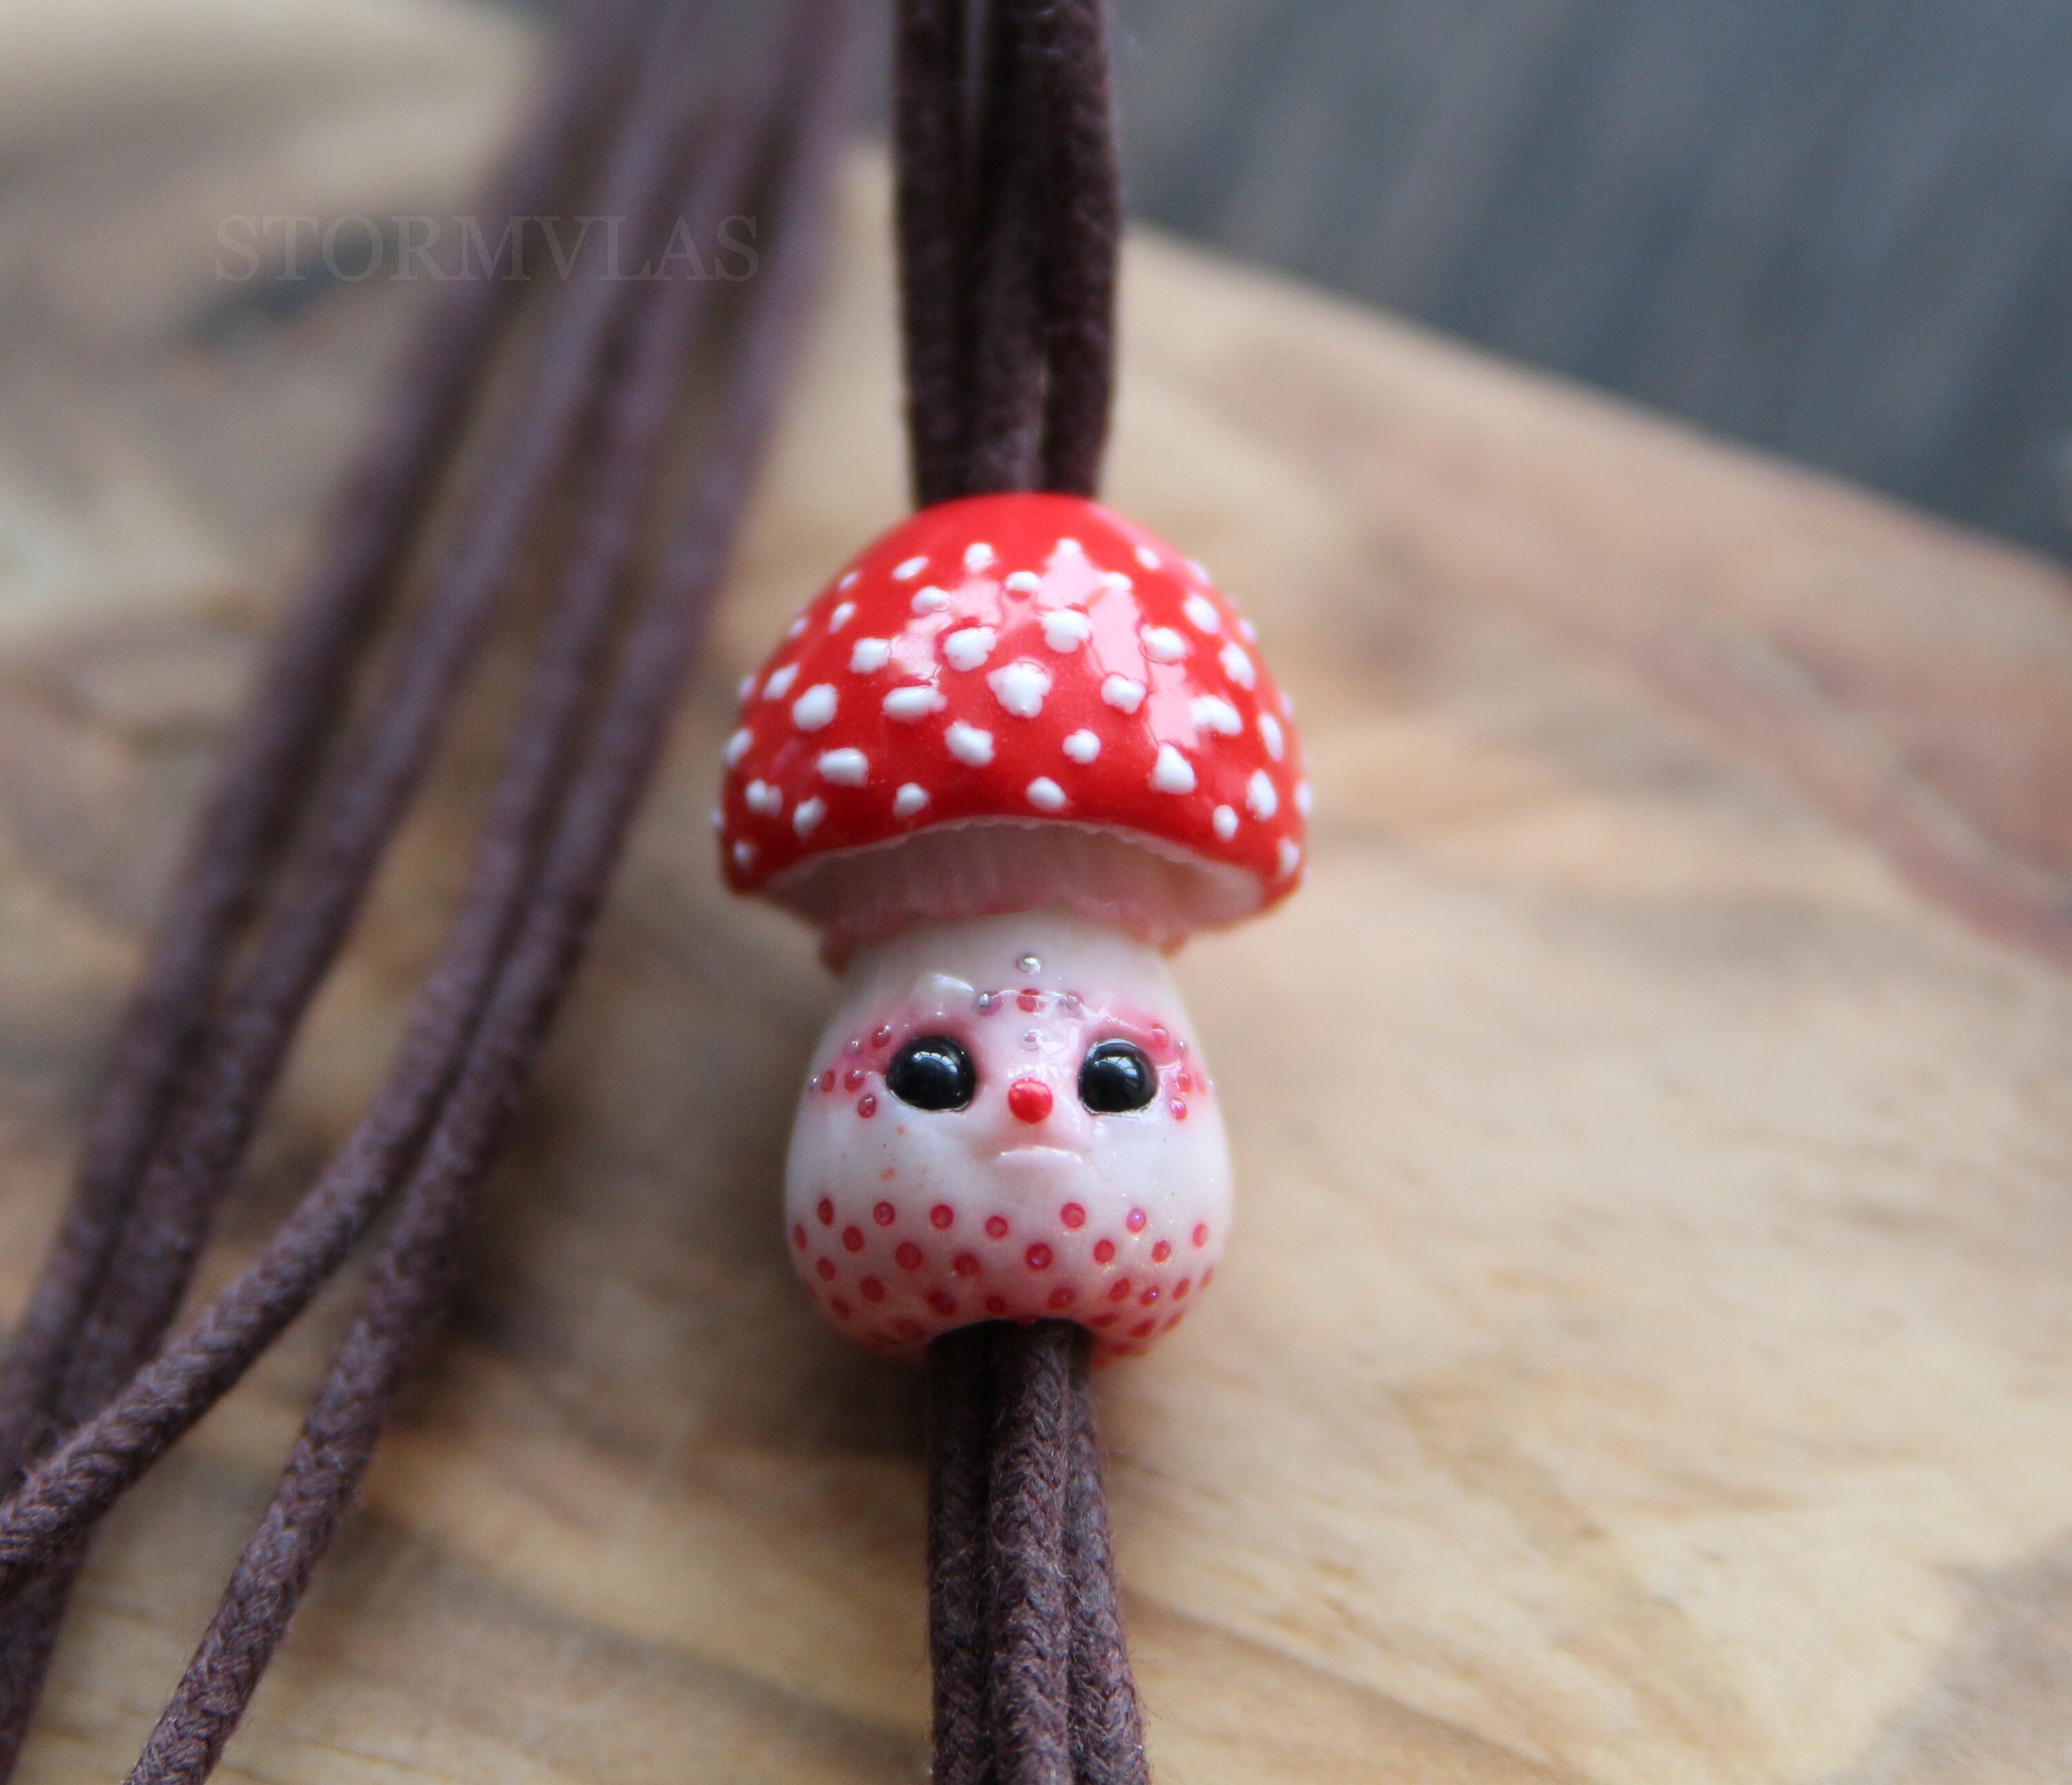 Strand of Colorful Mushroom Beads,shroom Pendant Beads,keychain Bright  Clear Mushroom Beads,mushroom Charms,boho Bead DIY Jewelry Making 